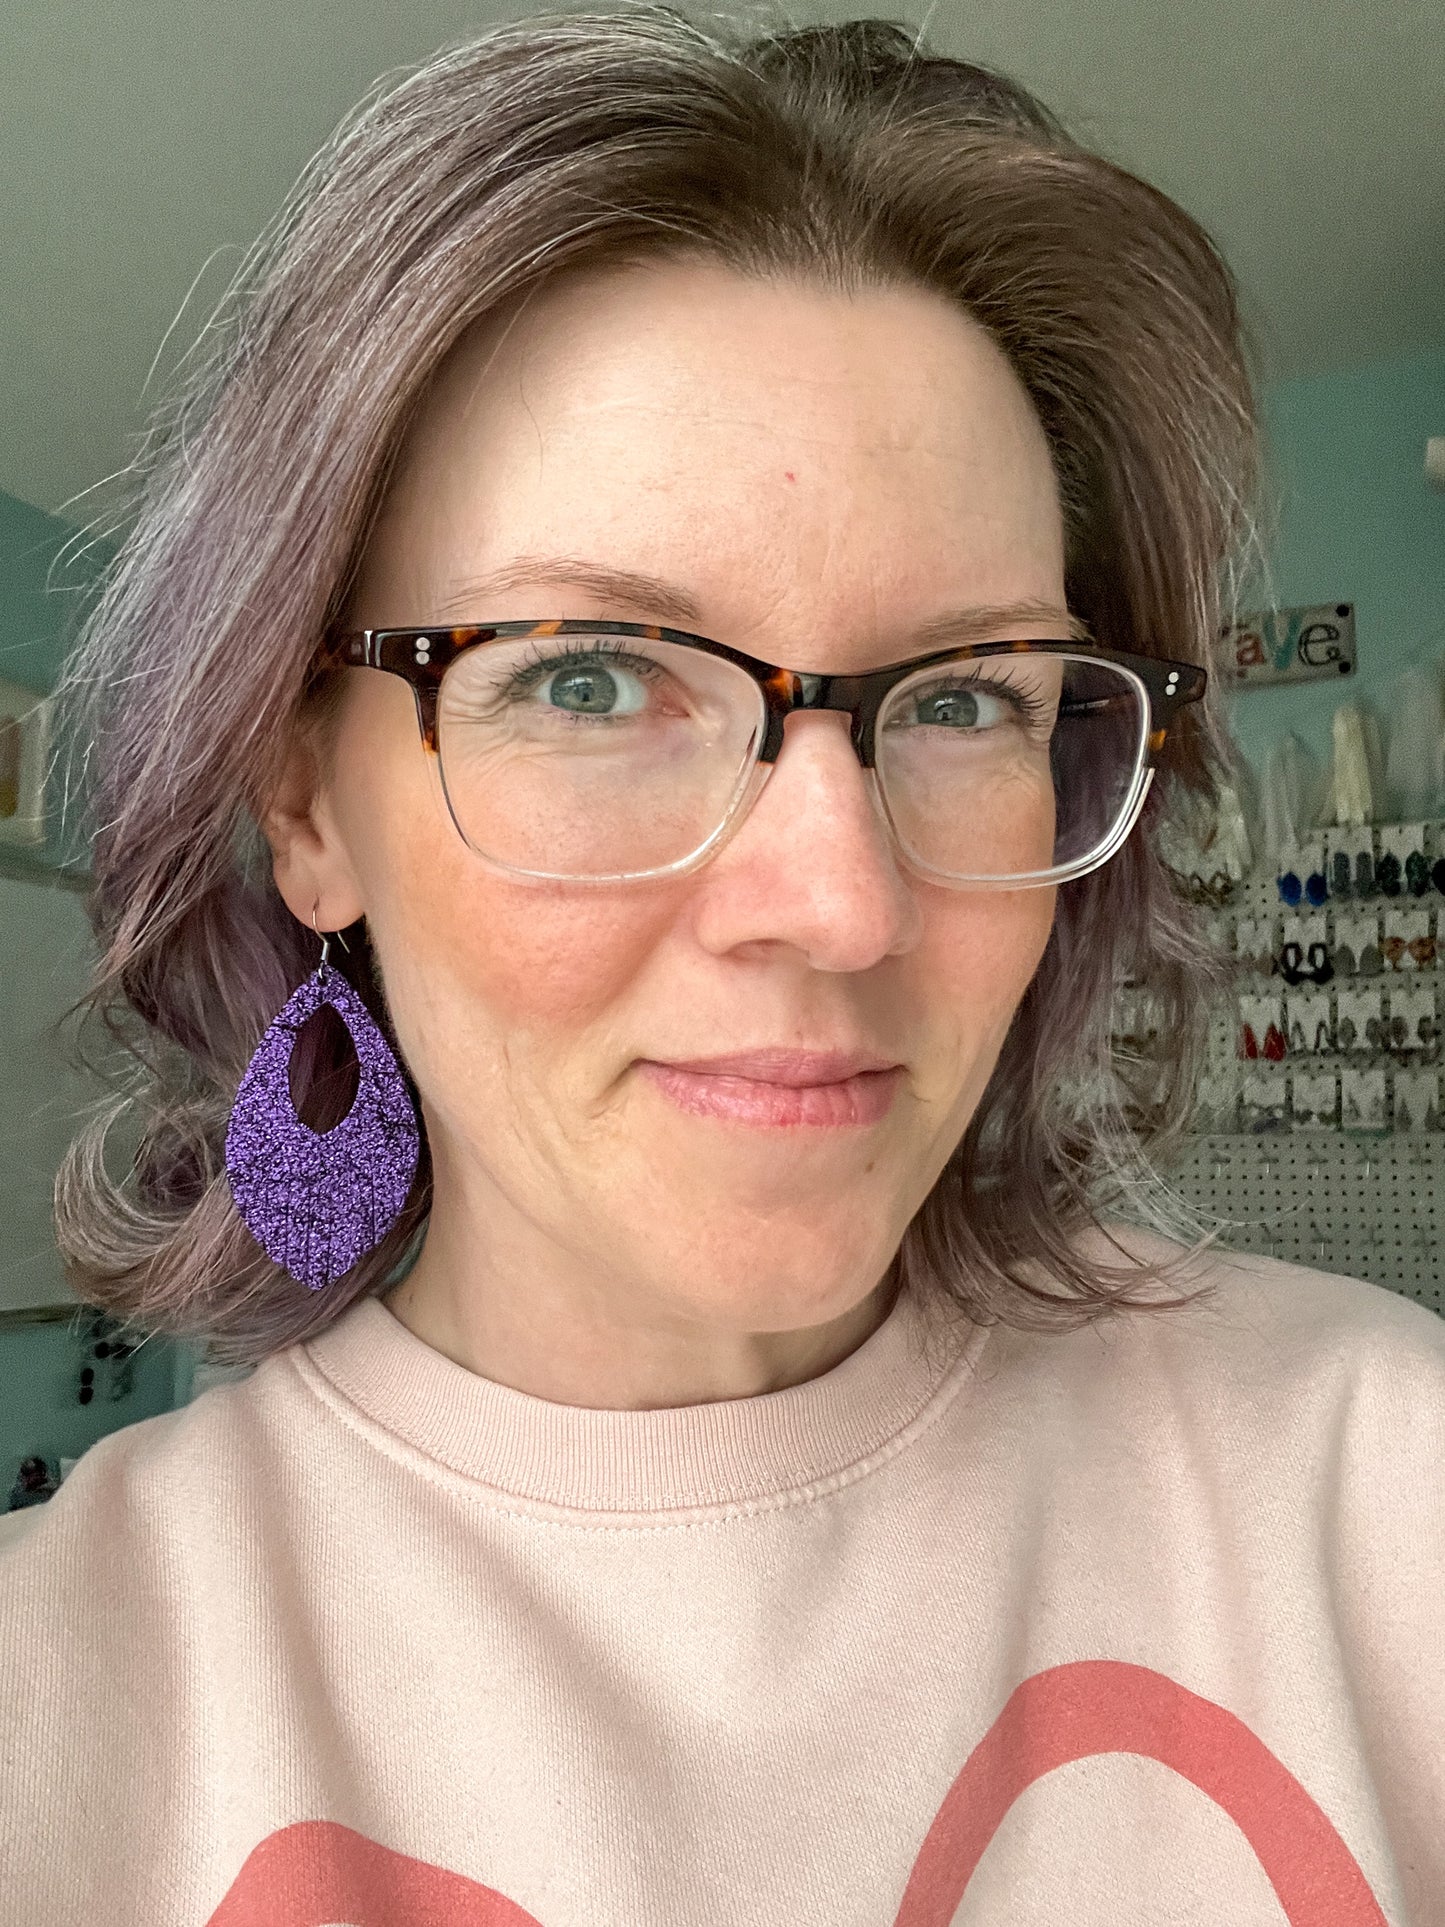 Metallic Purple Shimmer Leather Earrings: Choose From 2 Styles - LAST CHANCE